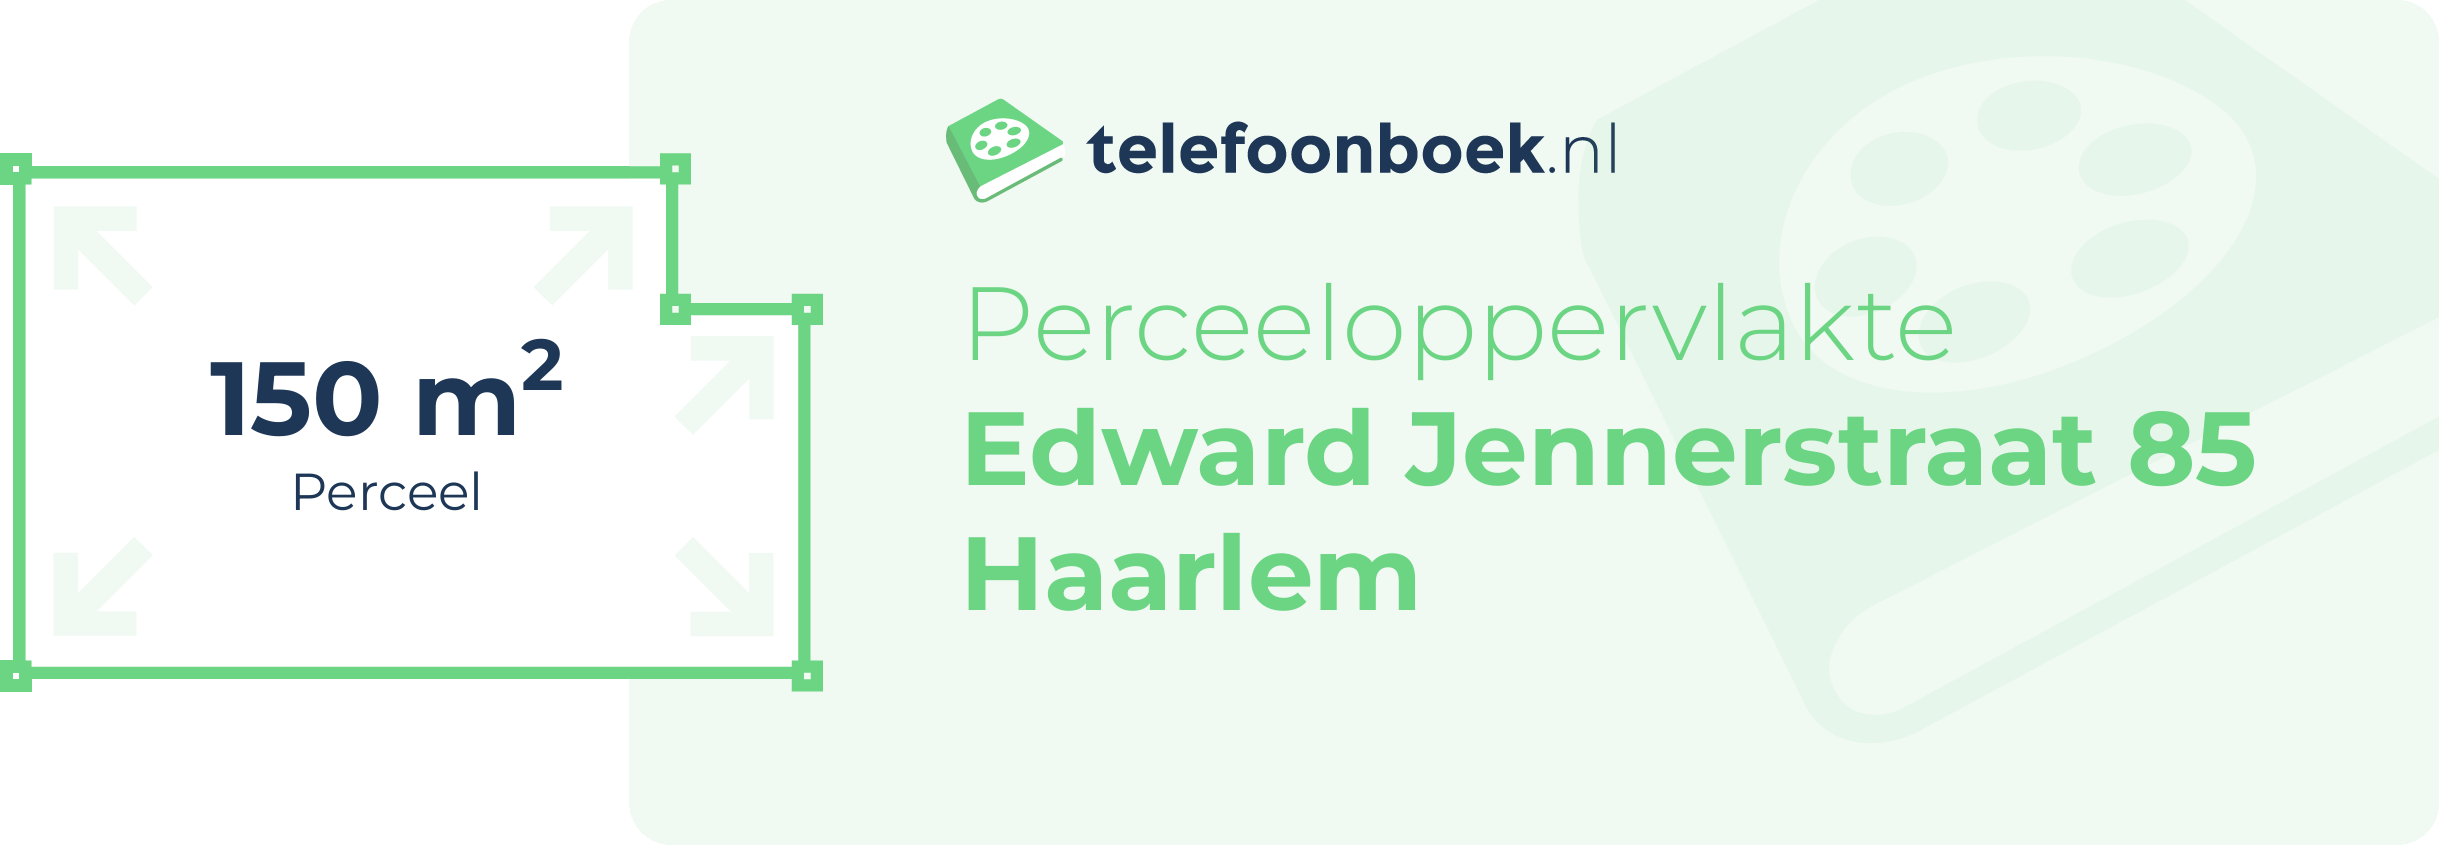 Perceeloppervlakte Edward Jennerstraat 85 Haarlem